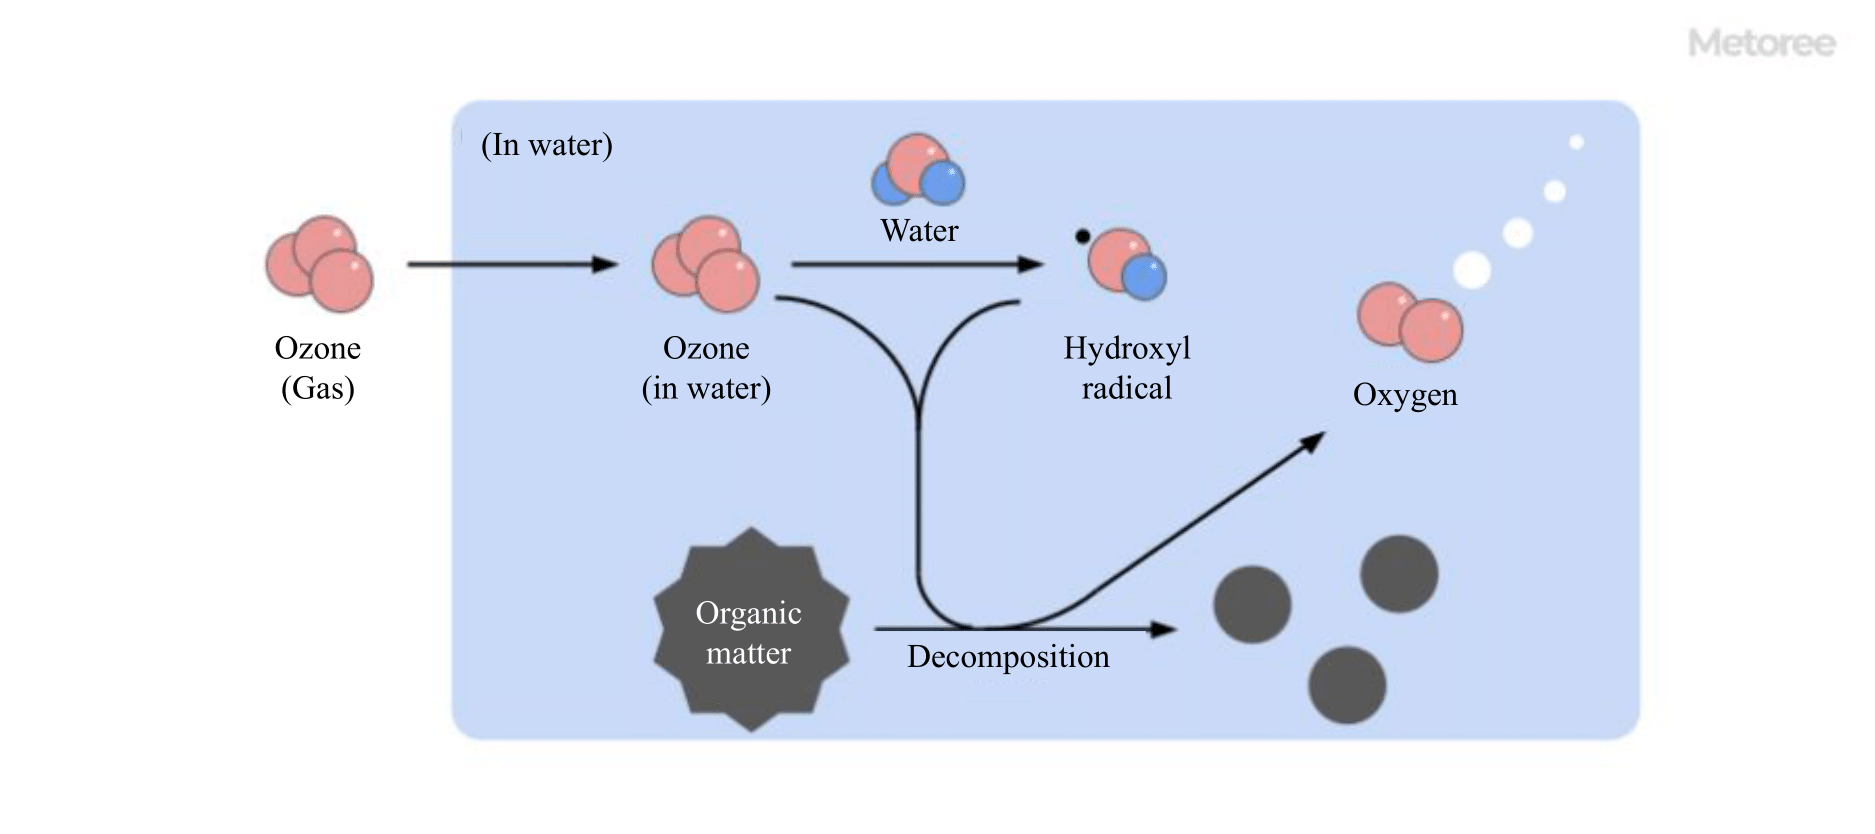 Figure 3. Mechanism of action of ozone